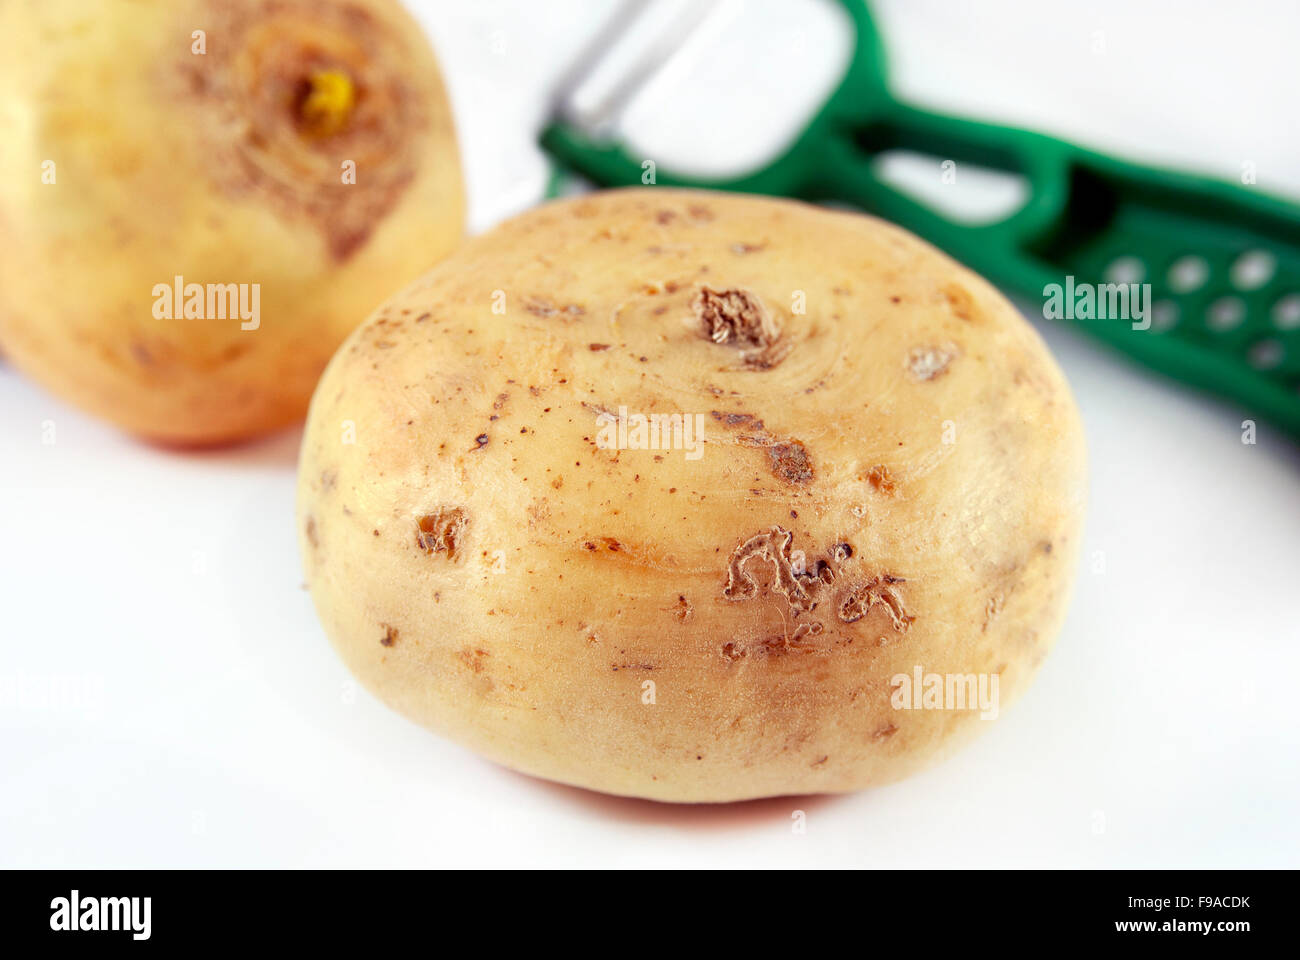 Turnip and a vegetable peeler Stock Photo